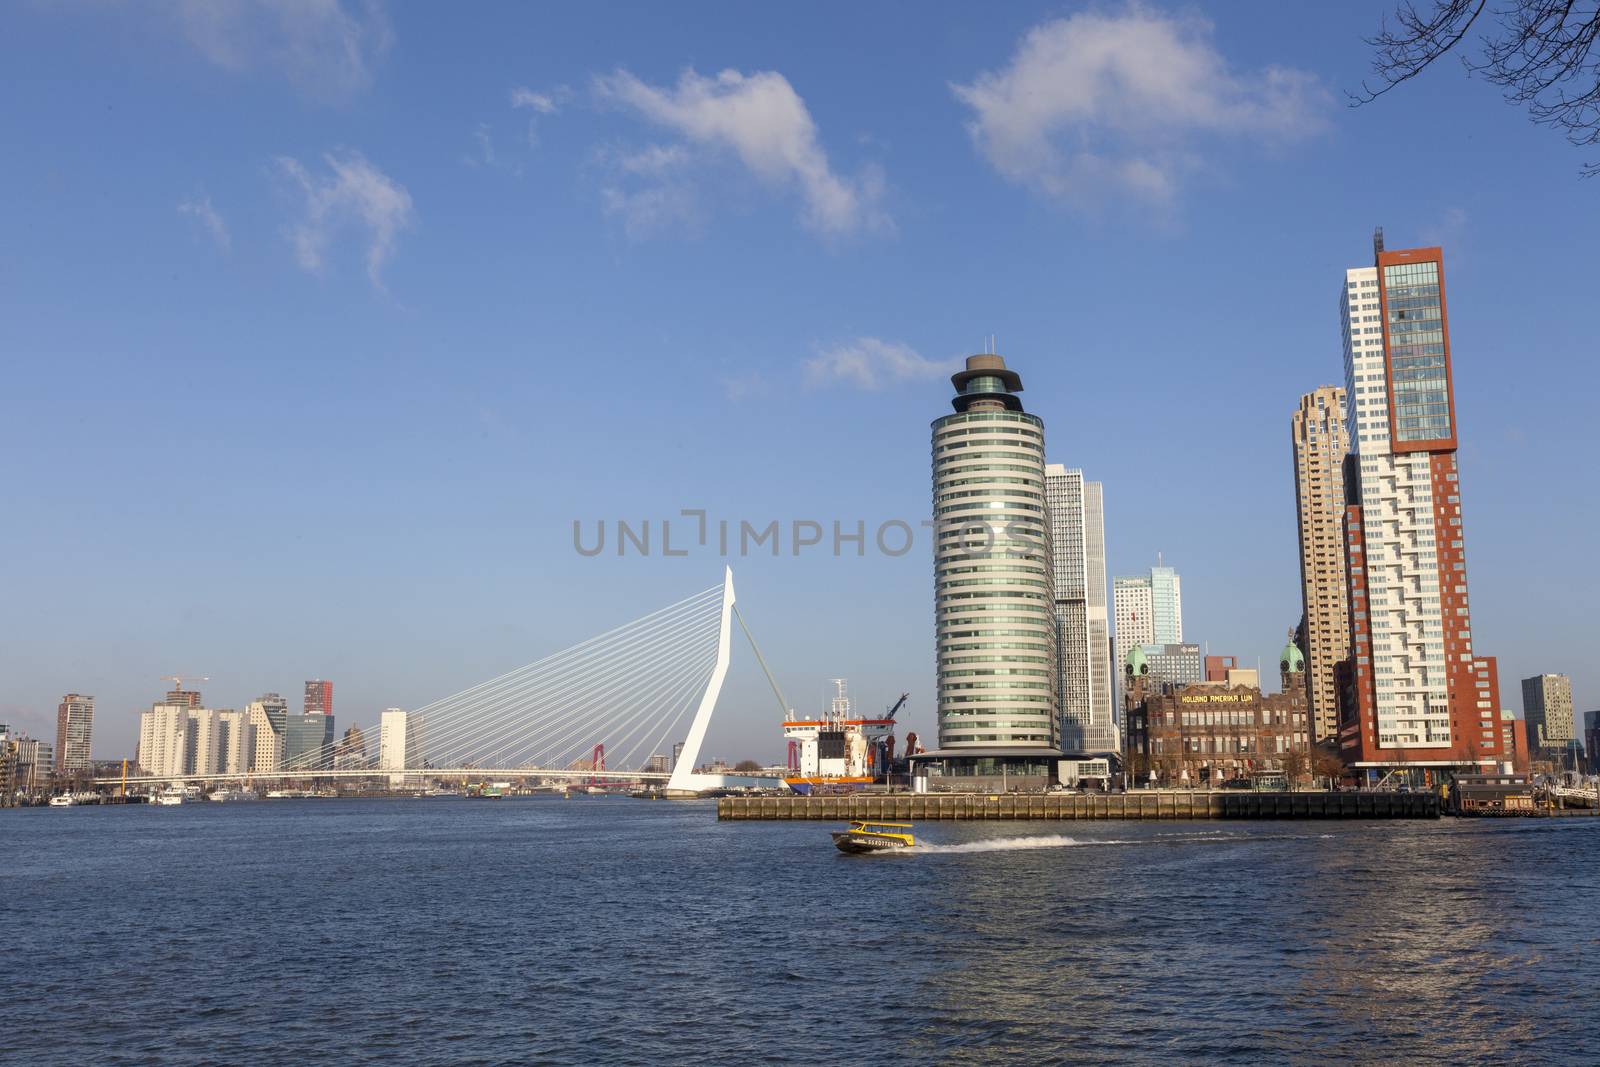 Rotterdam Skyline with Erasmusbrug bridge, Netherlands. - Image